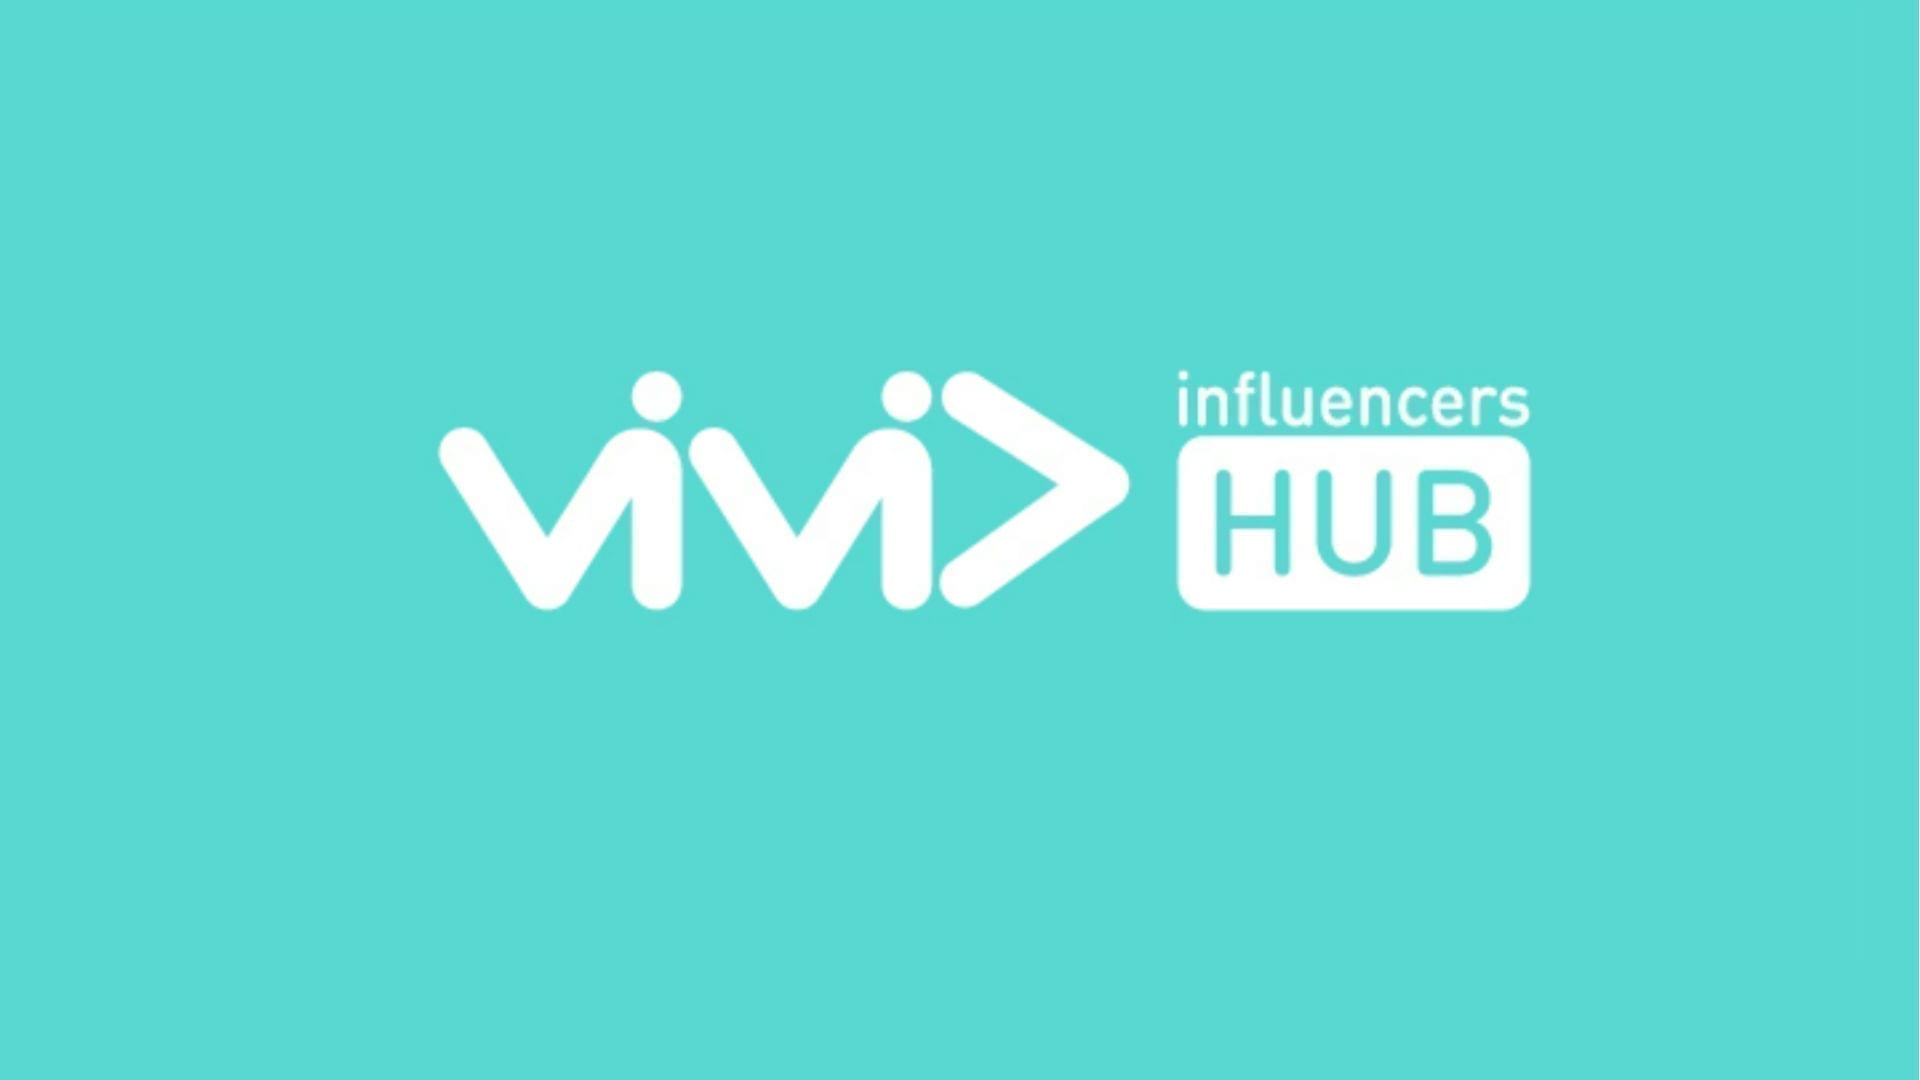 ViViD Influenсеrs HUB